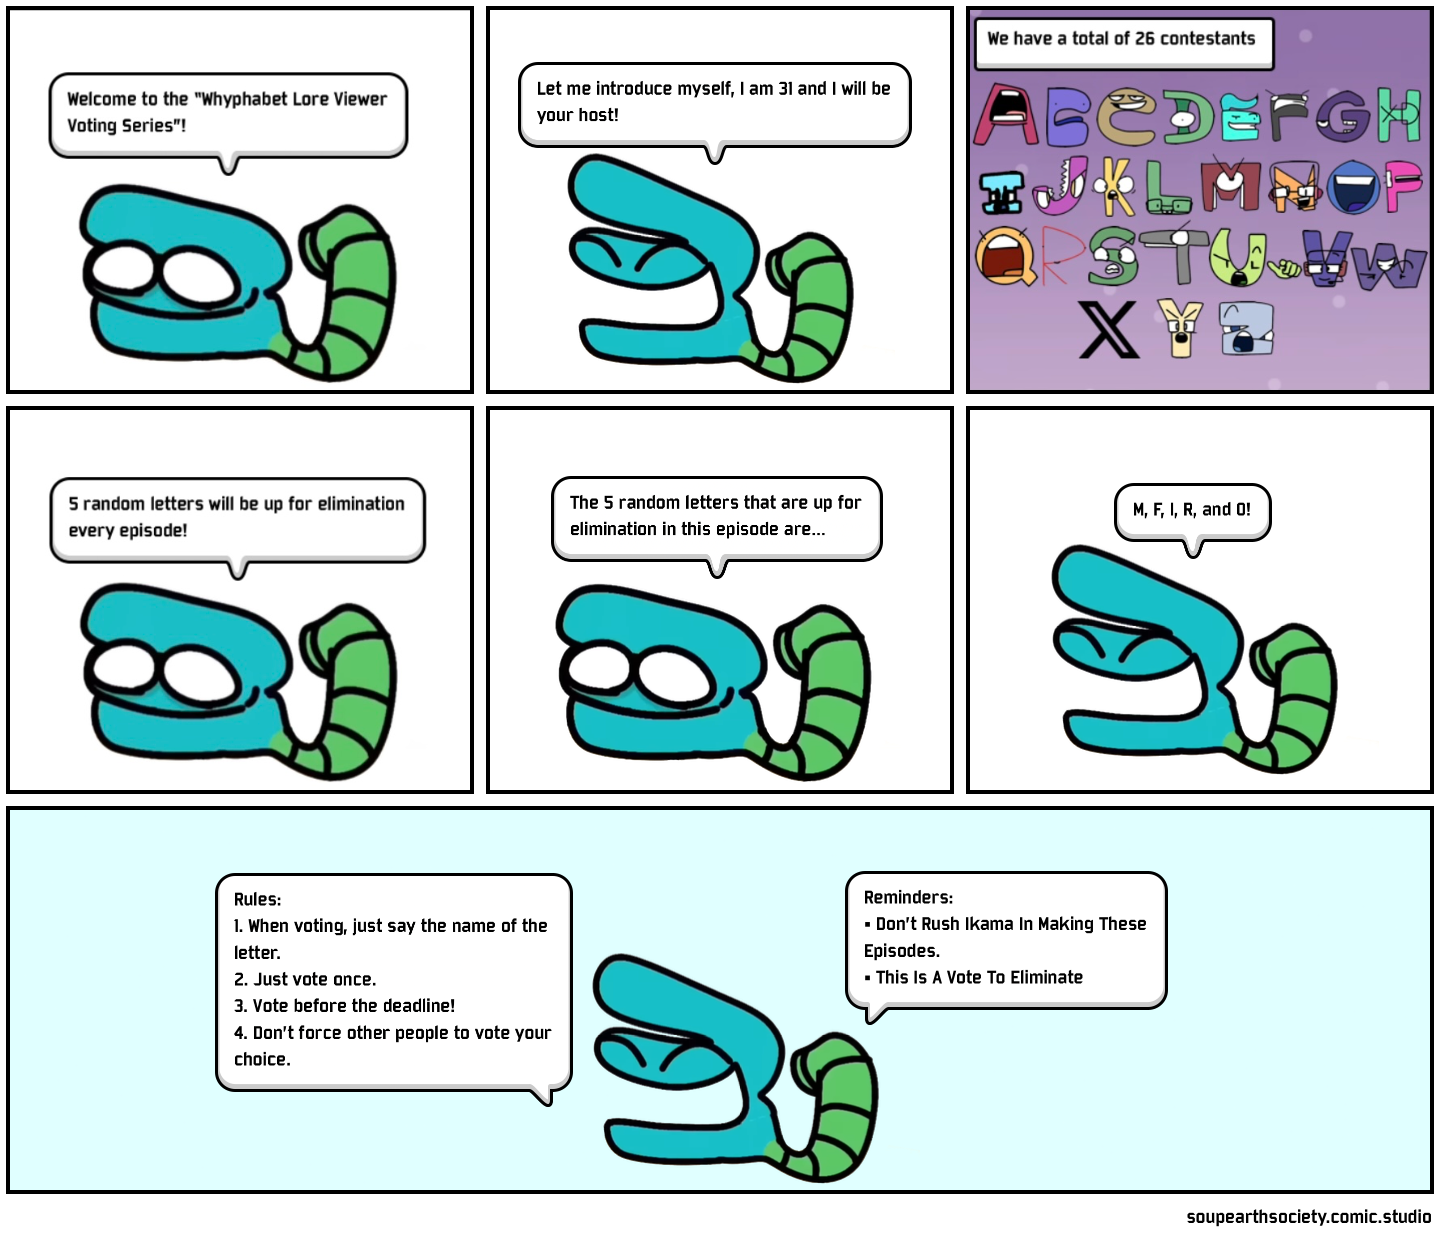 Random alphabet lore memes 1 - Comic Studio